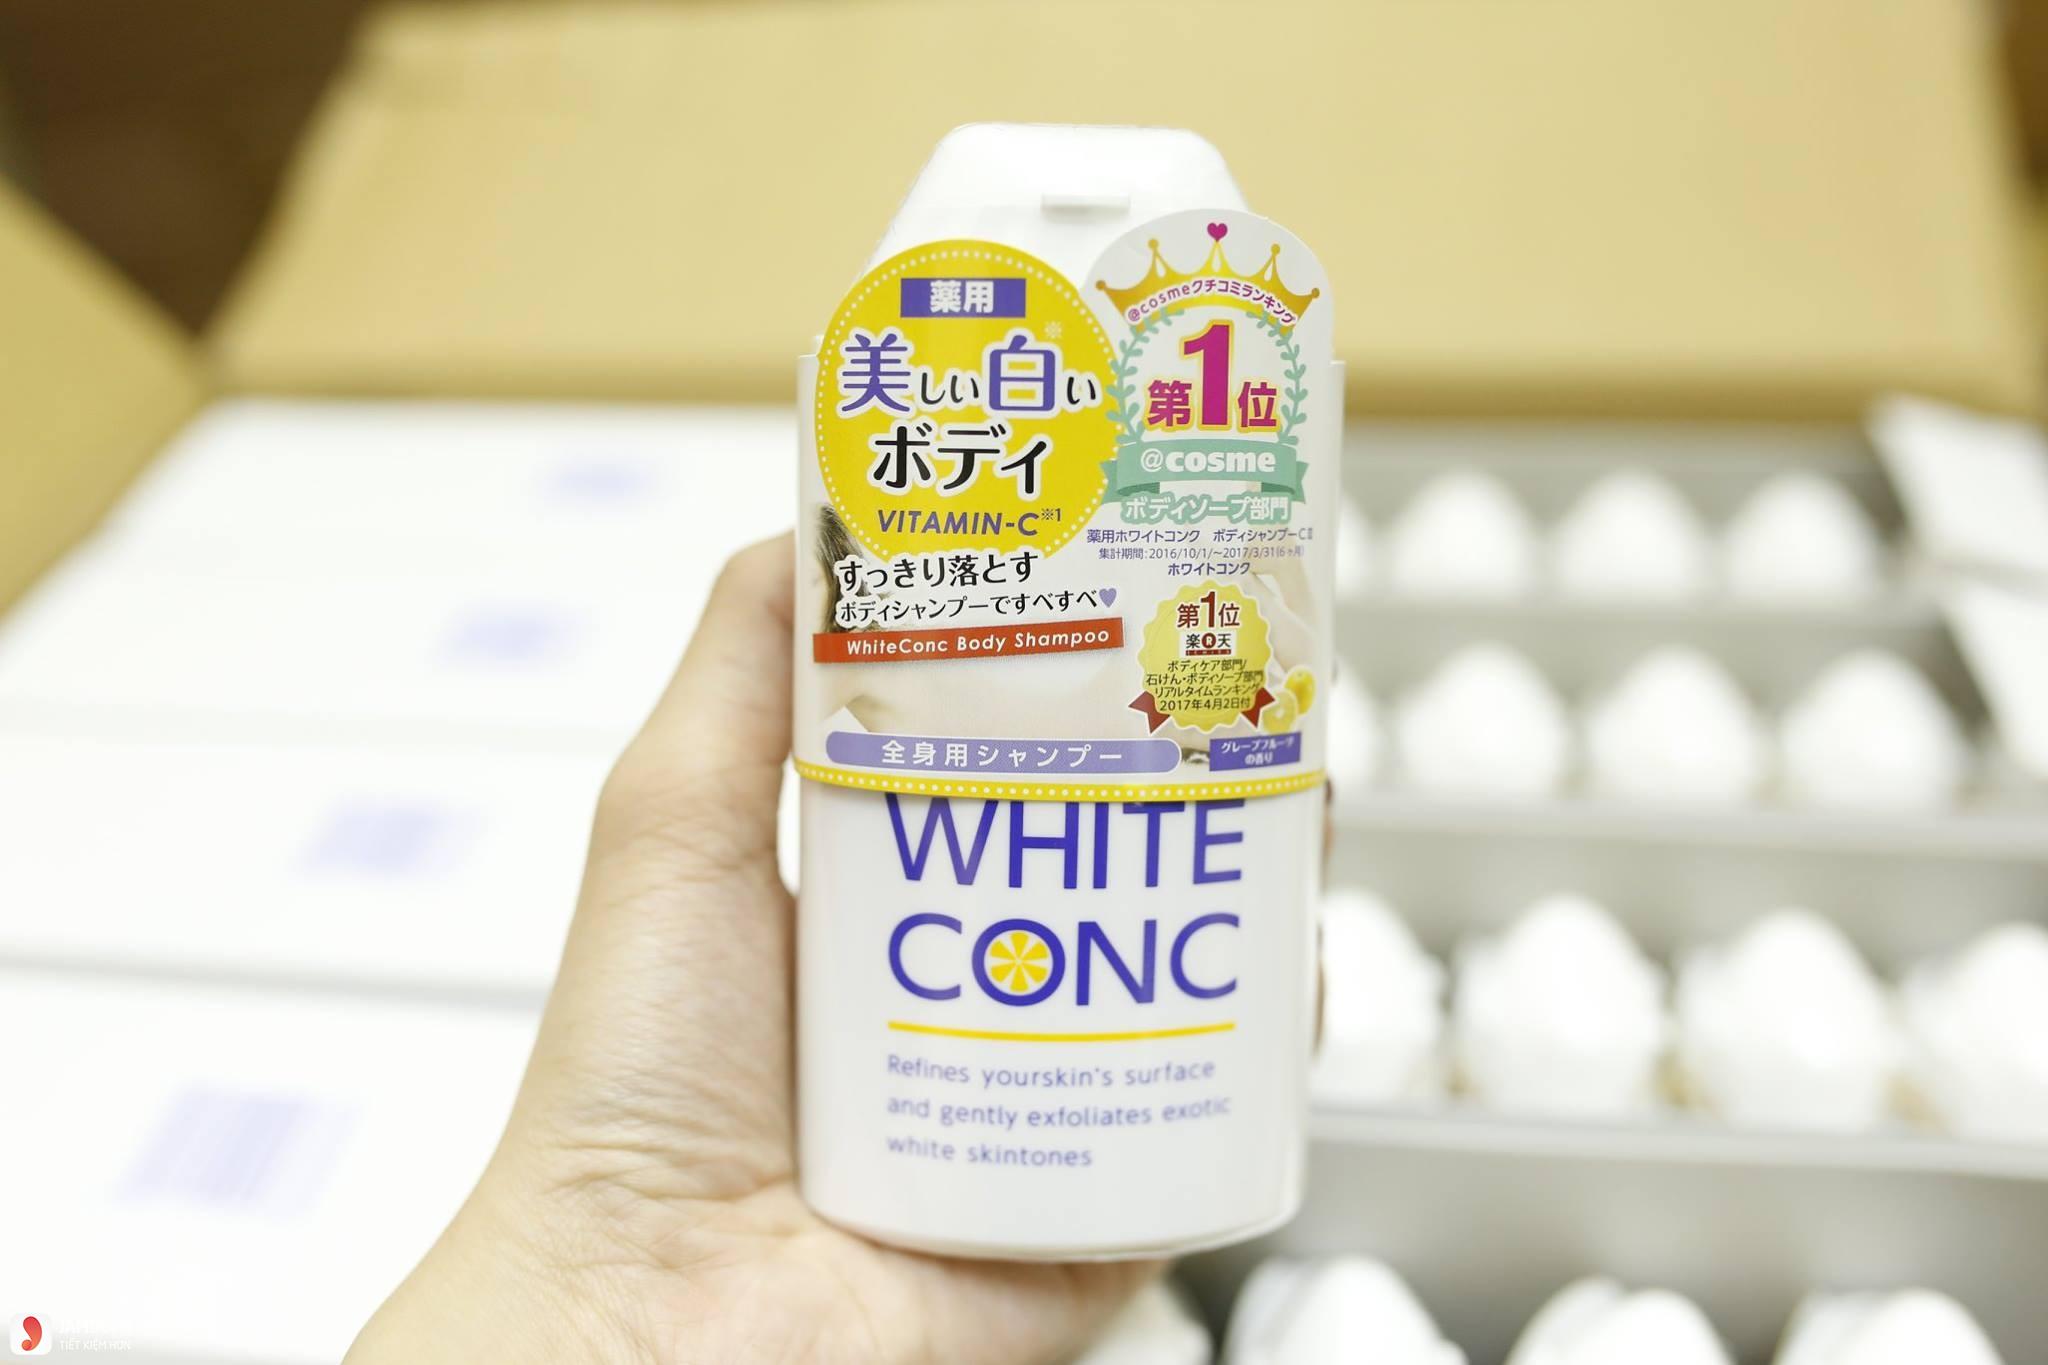 sữa tắm White Conc